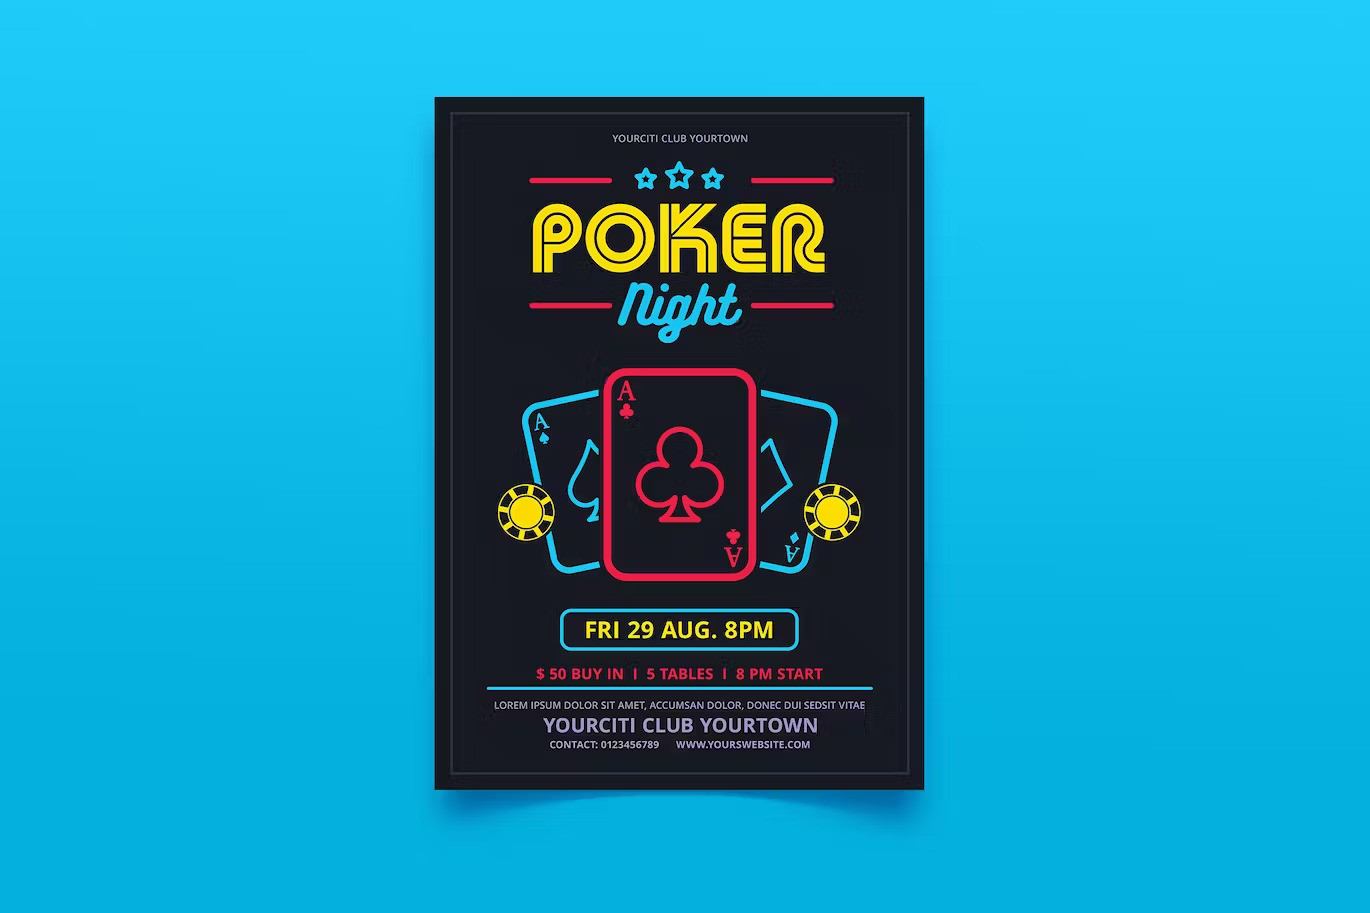 A poker night flyer template